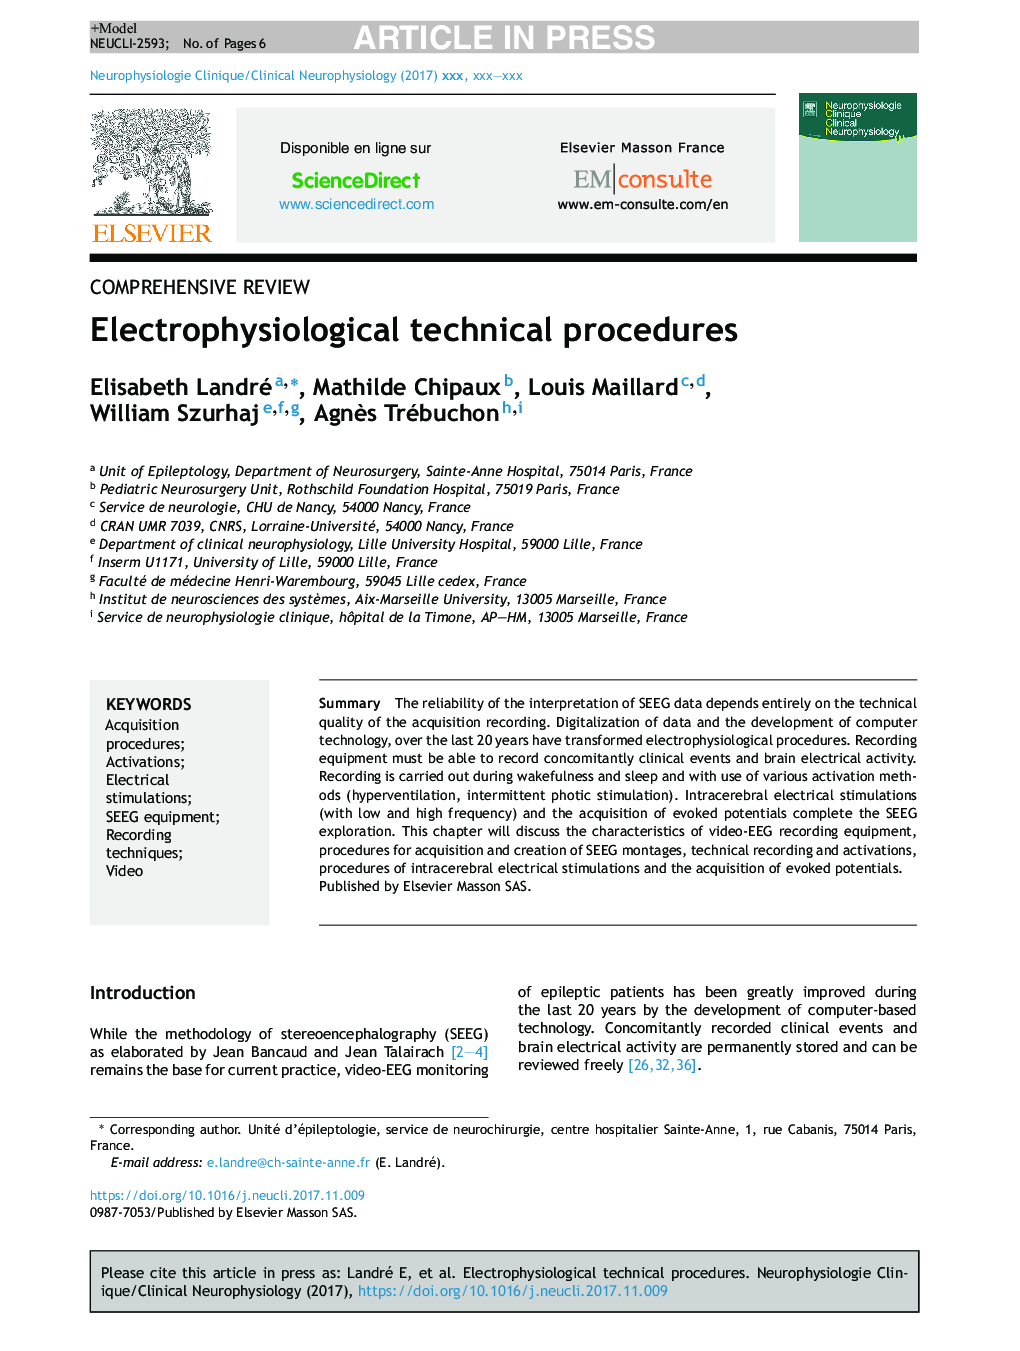 Electrophysiological technical procedures